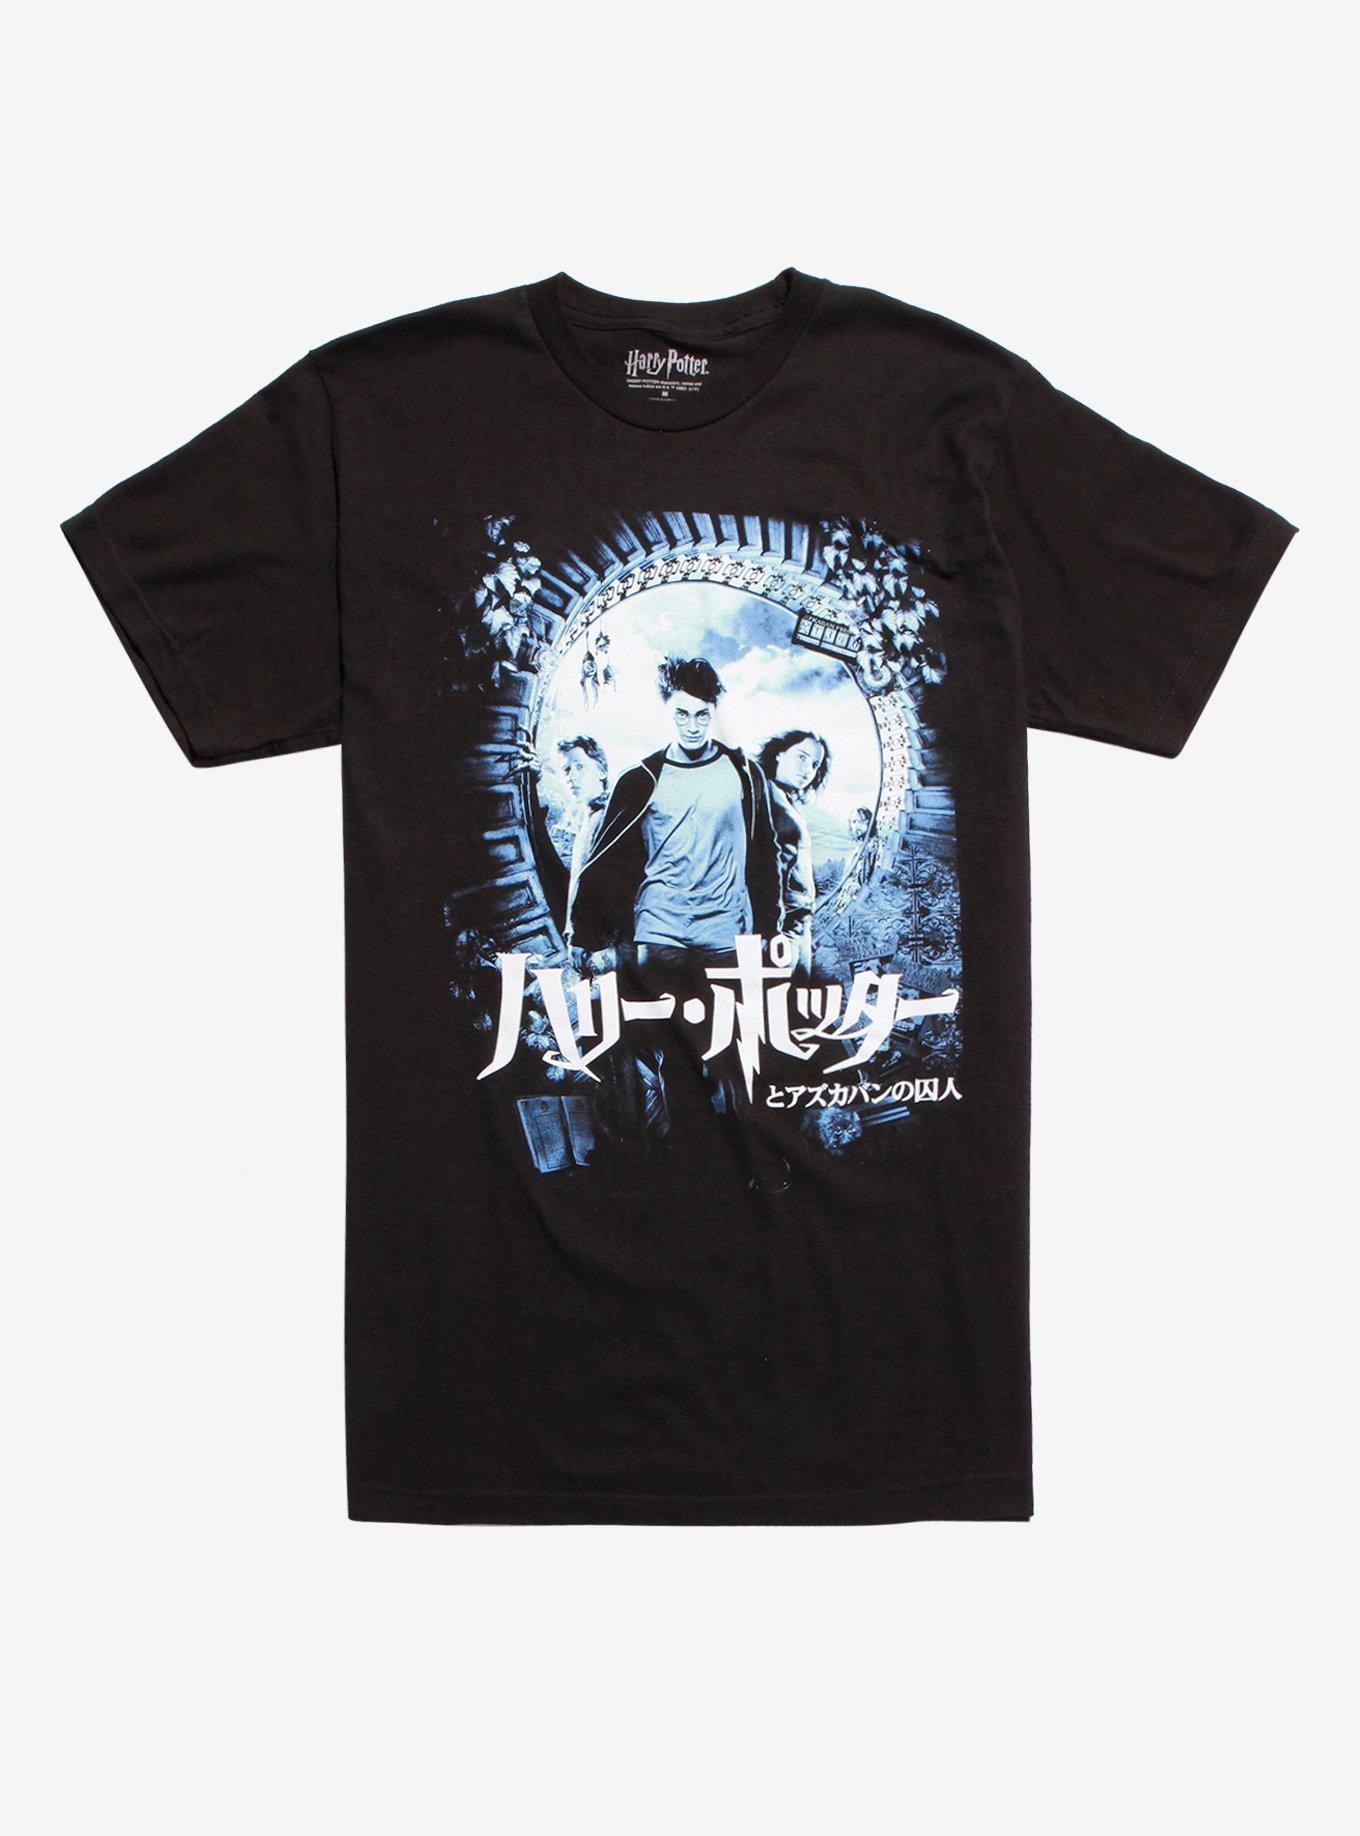 Harry Potter And The Prisoner Of Azkaban Japanese T-Shirt | Hot Topic